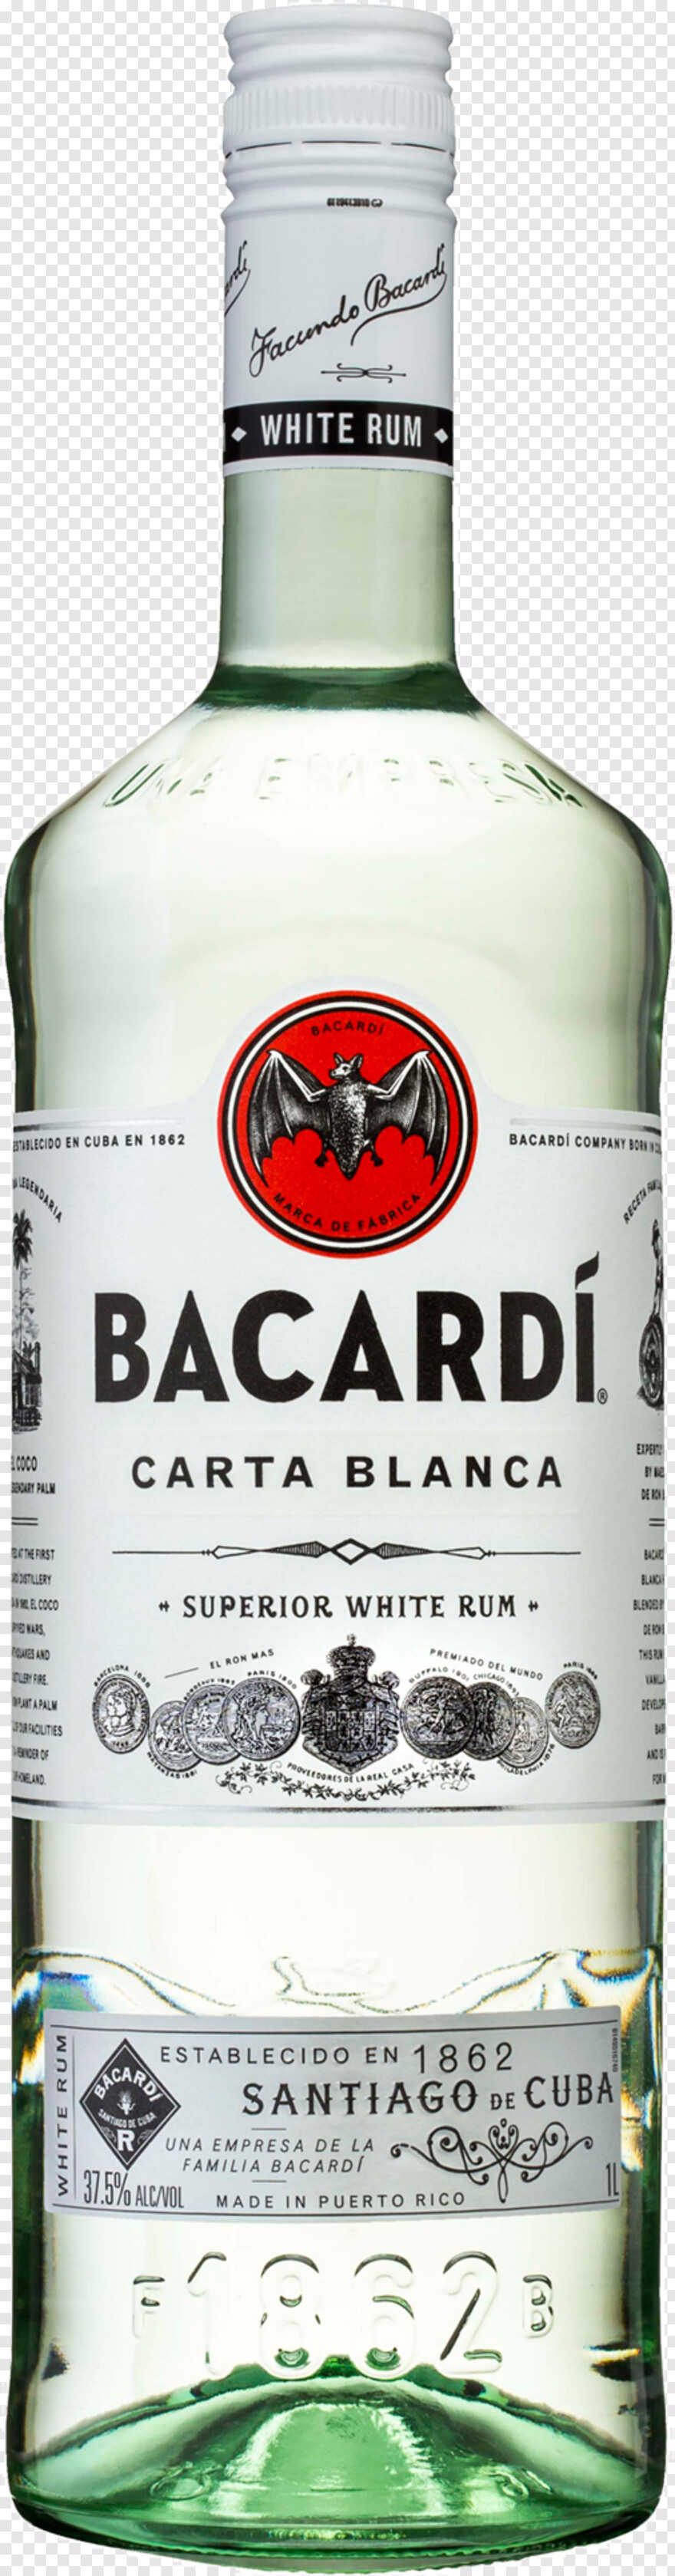 bacardi-logo # 326372